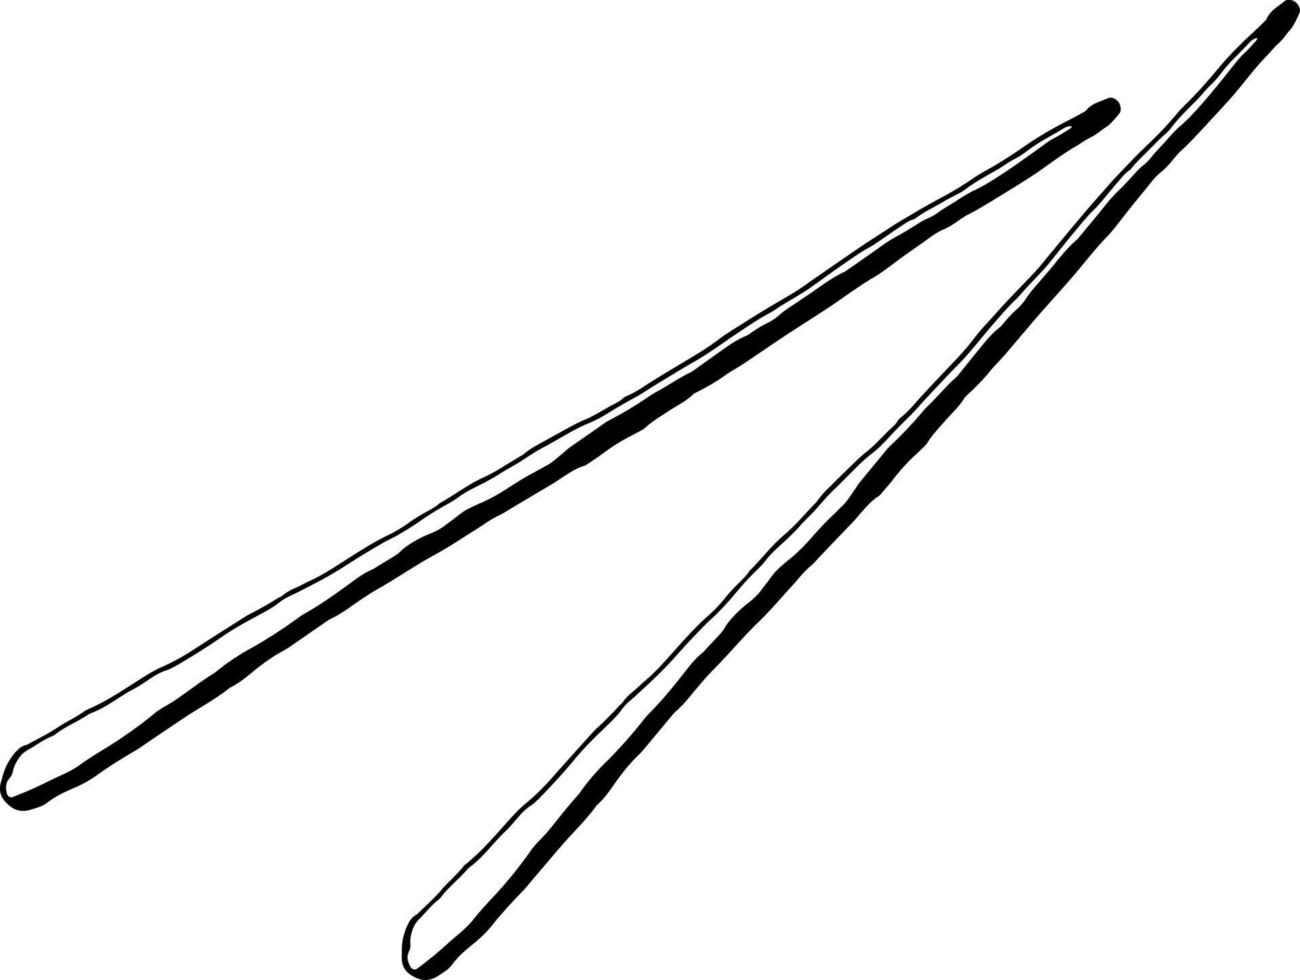 Chinese chopsticks. Vector clipart